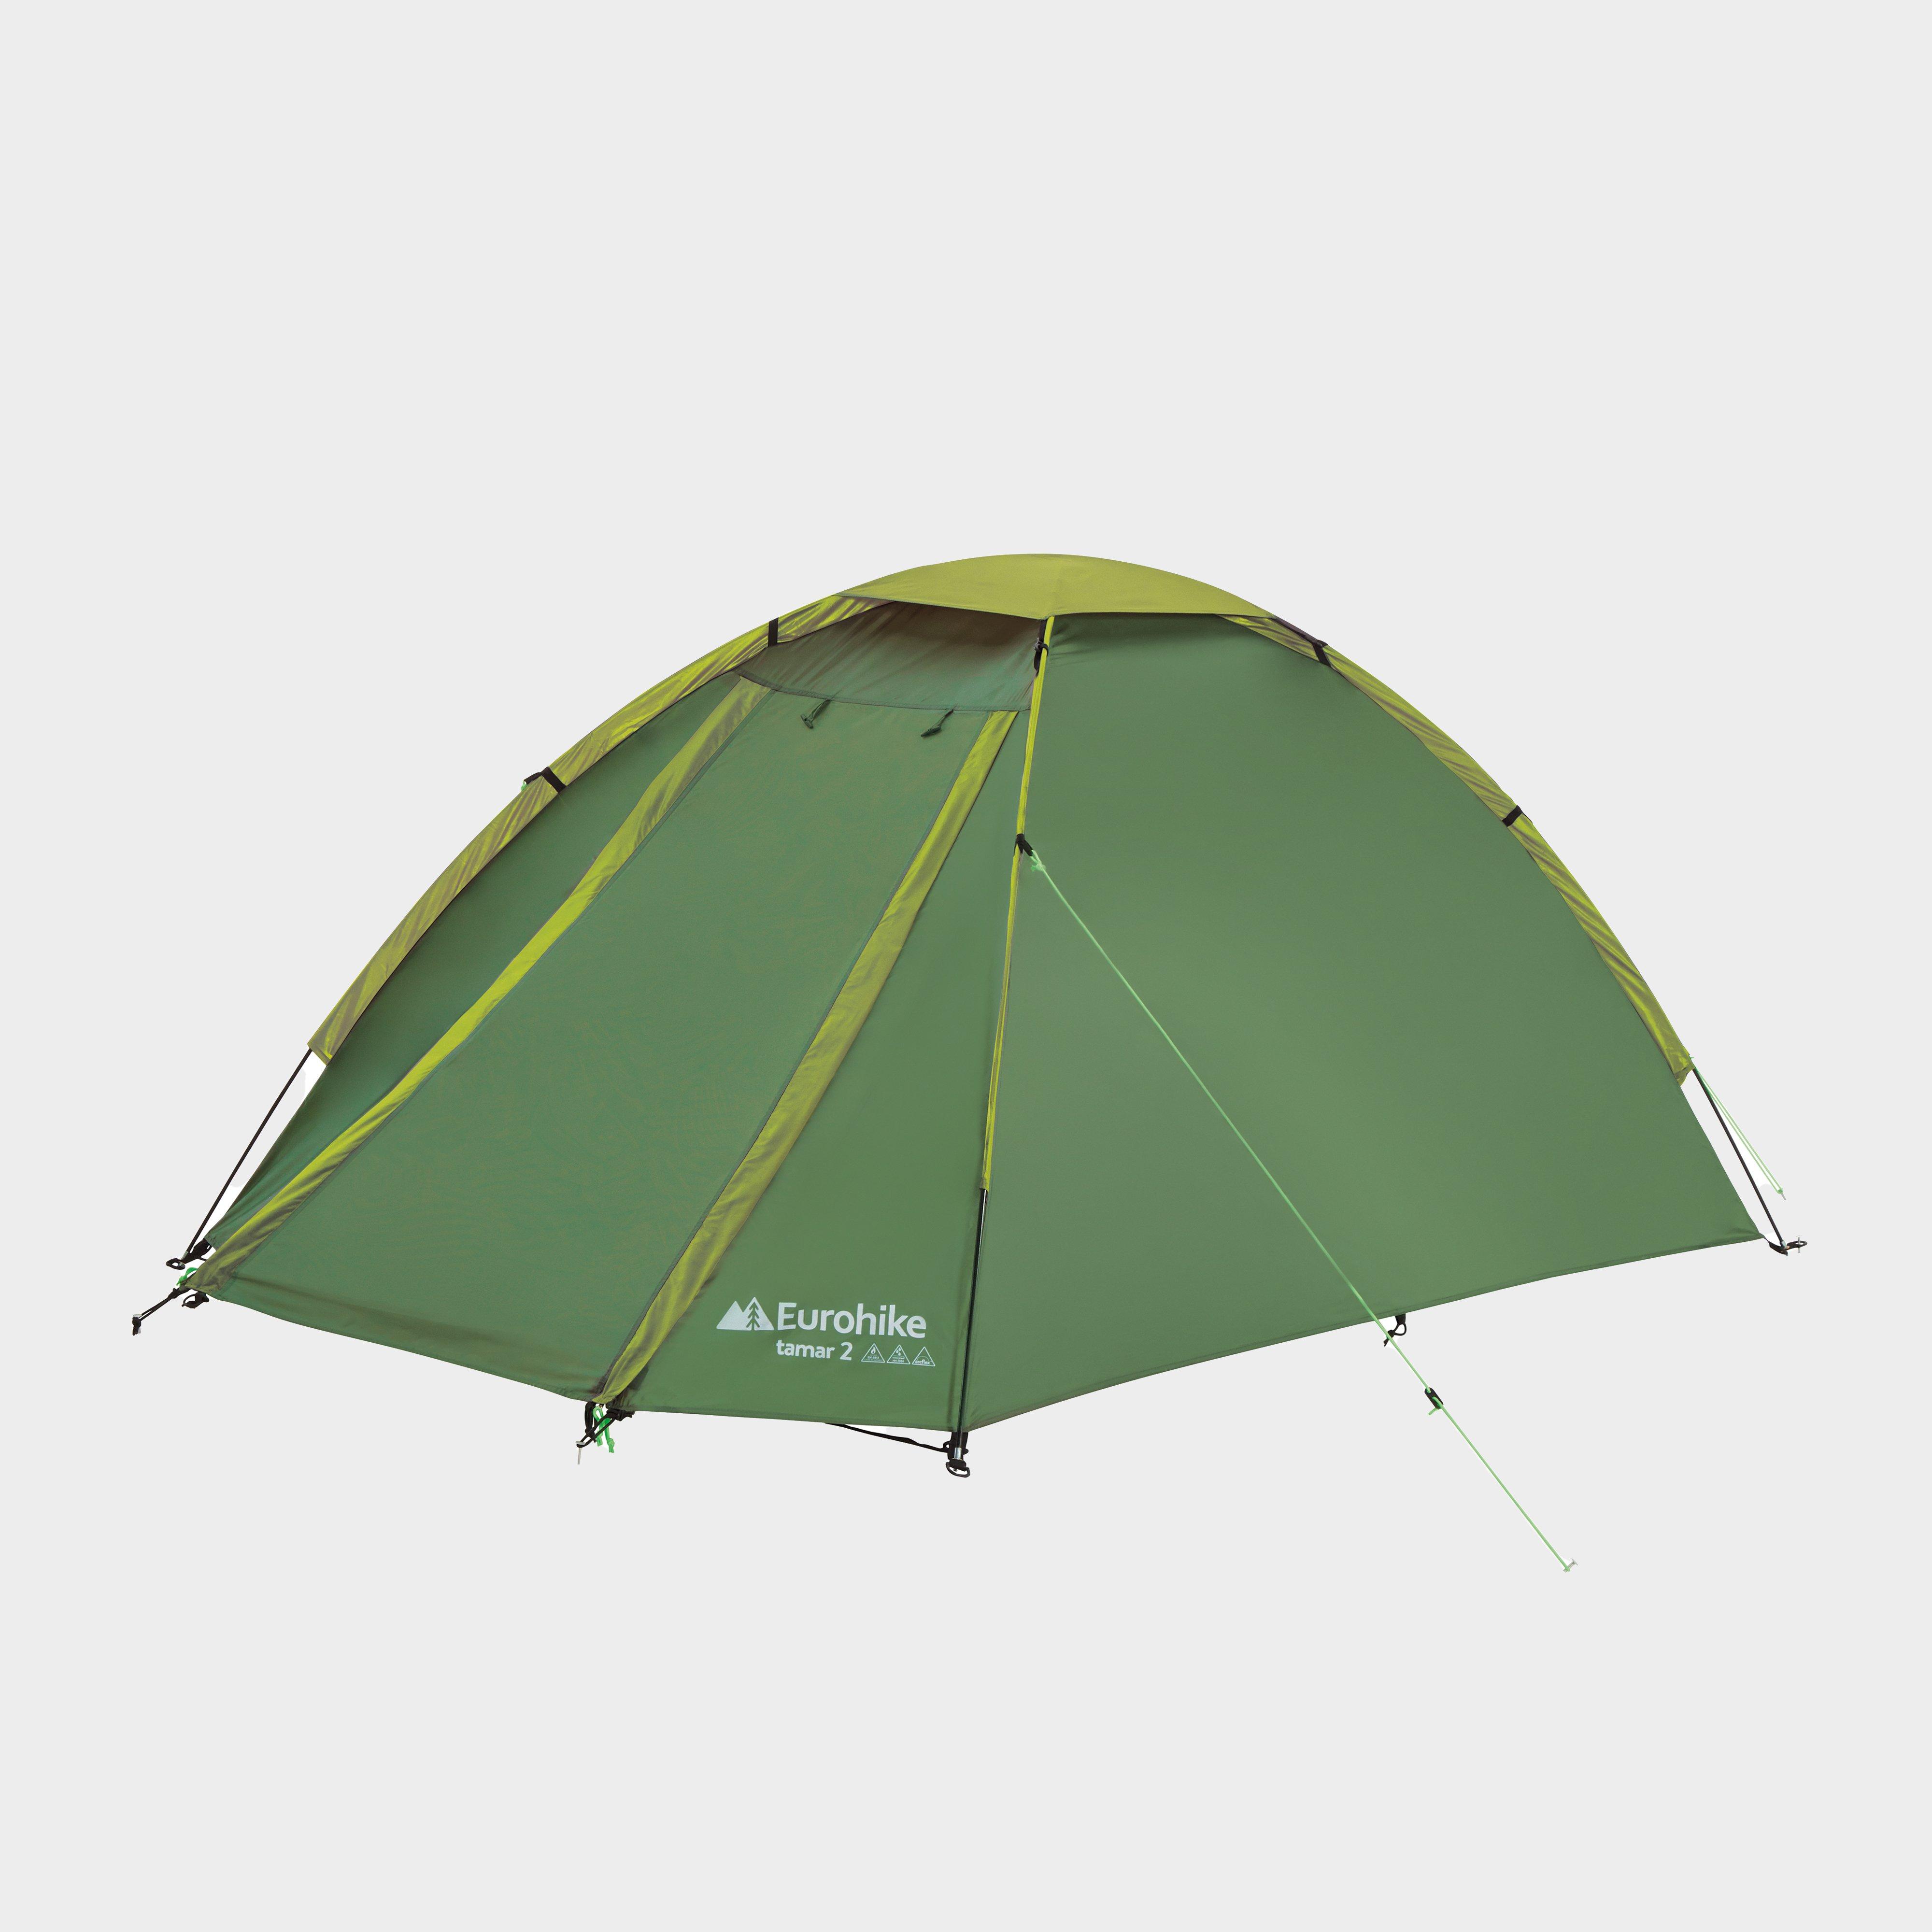 Eurohike Tamar 2 Tent - Green/green  Green/green